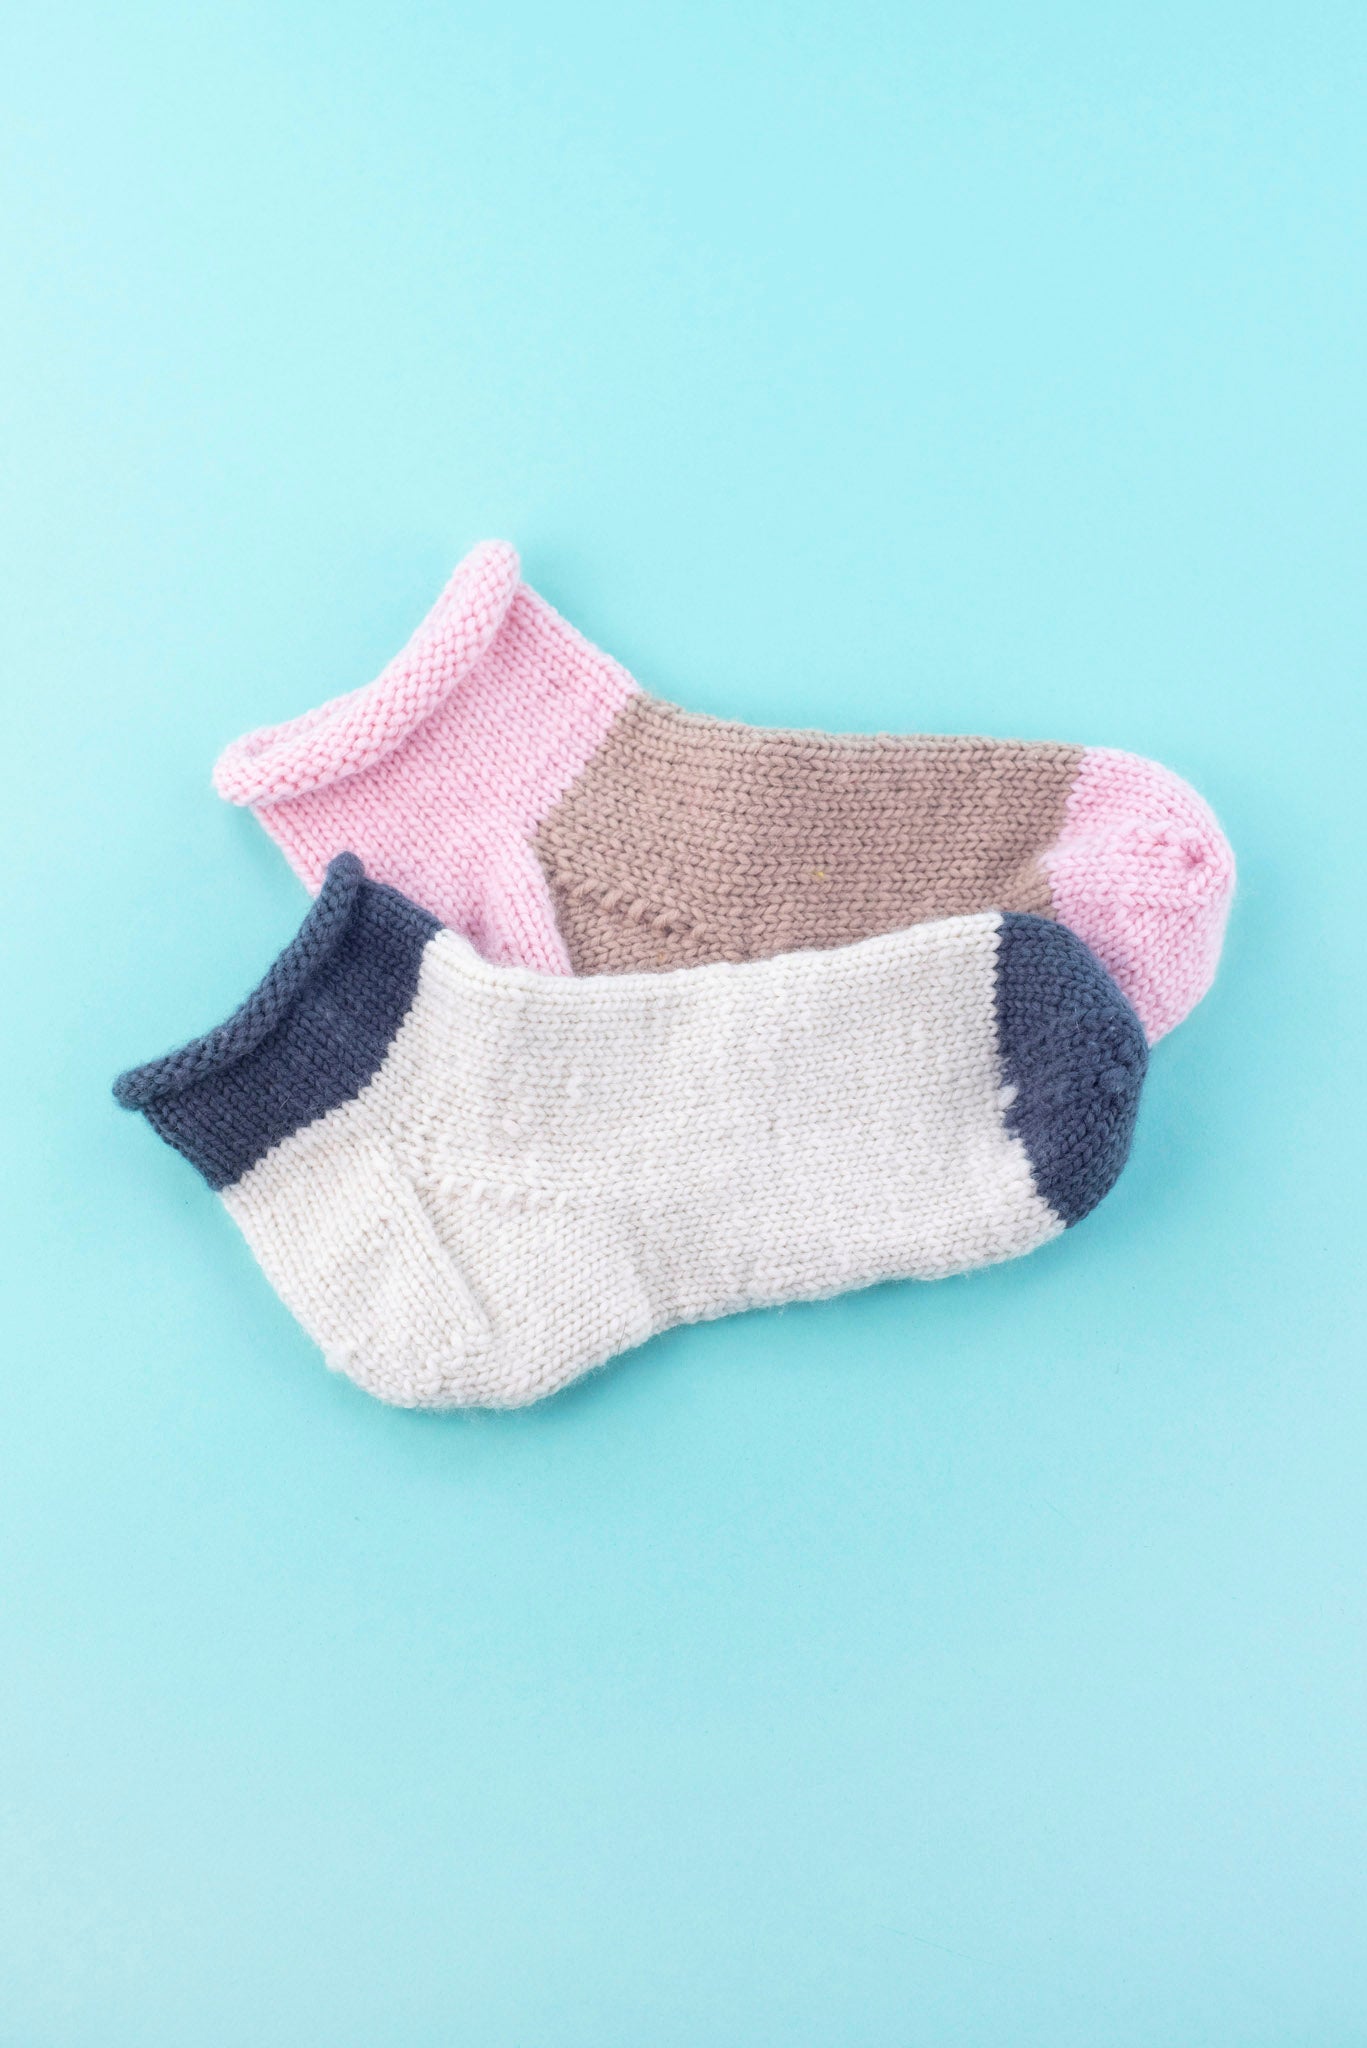 DIY Kit - My First Socks - Dream (Merino Worsted)